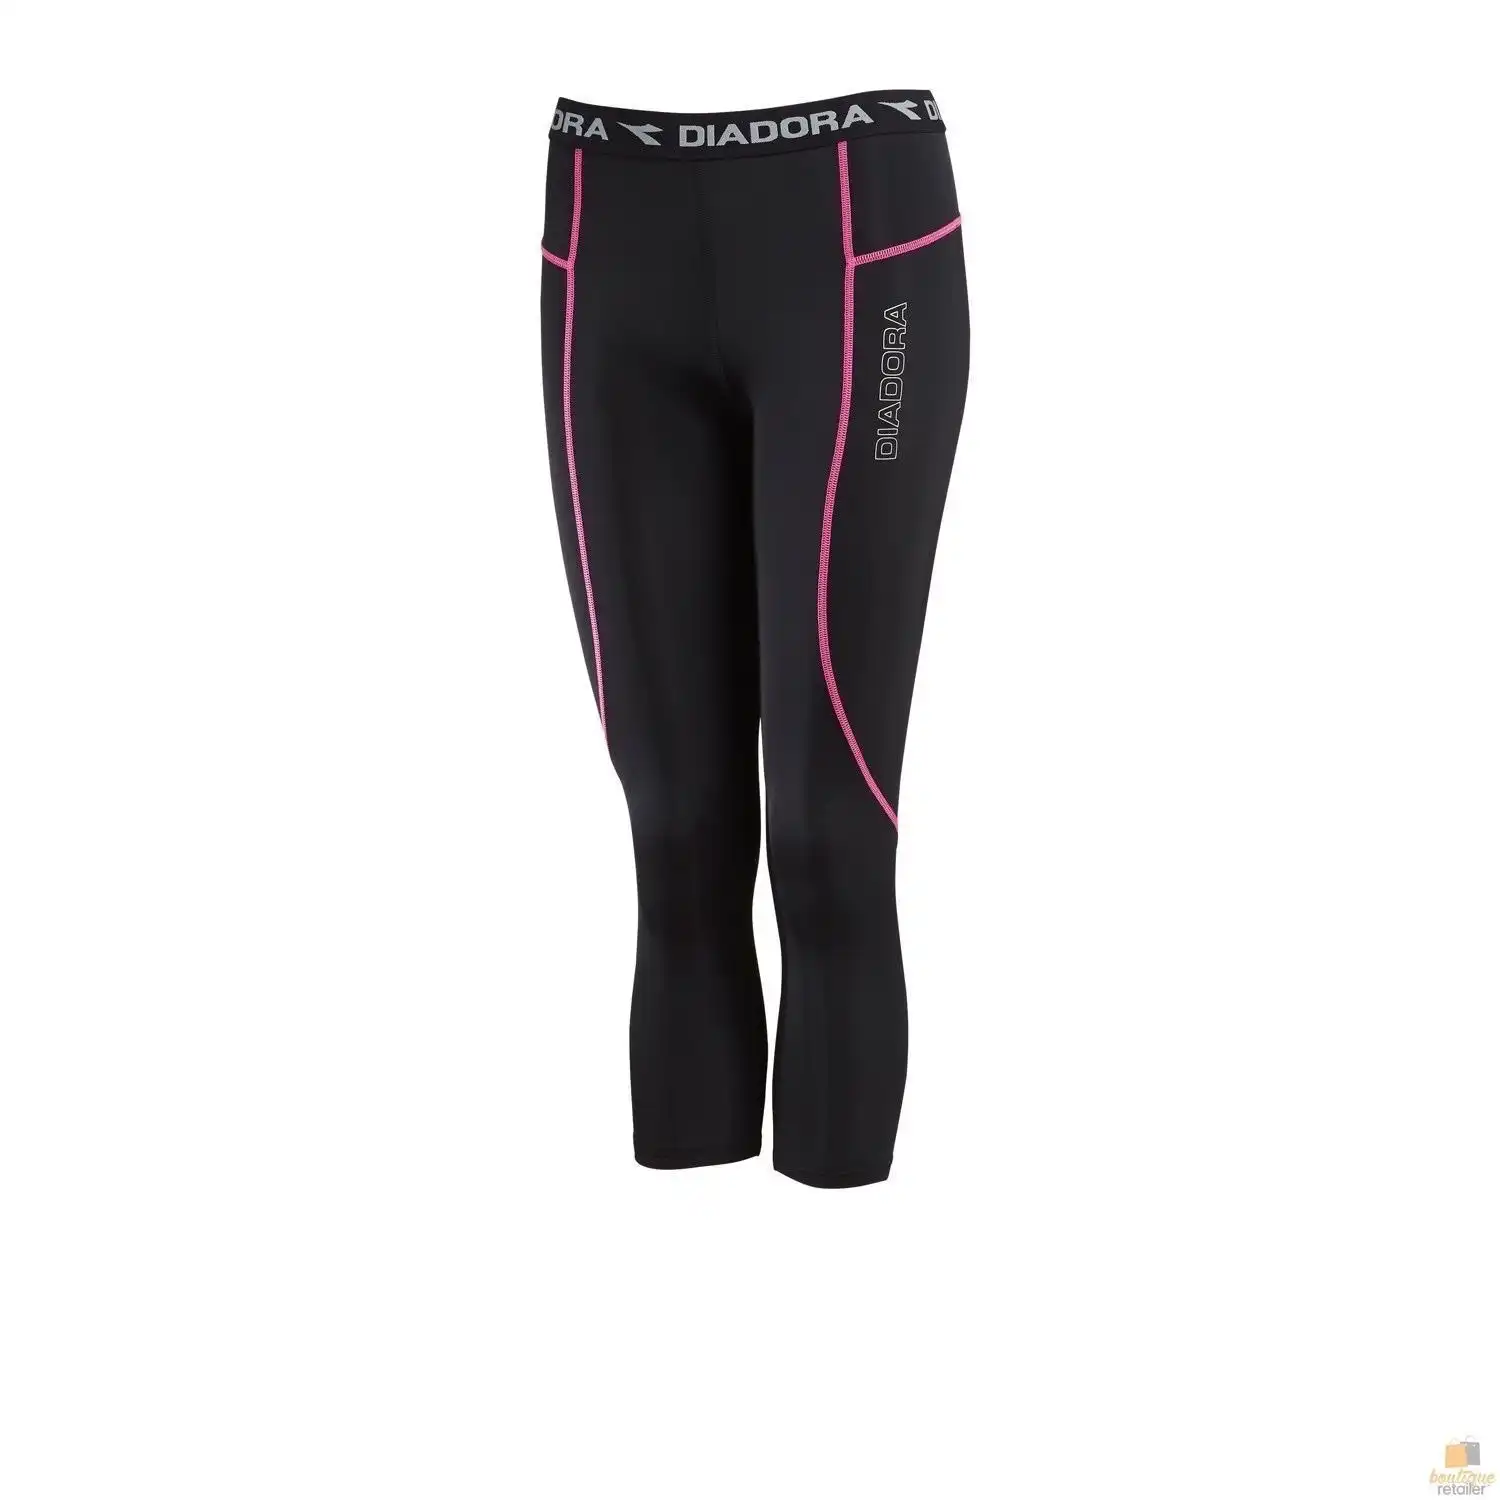 Diadora Ladies Compression Sports 3/4 Tights Gym Yoga - Black/Pink